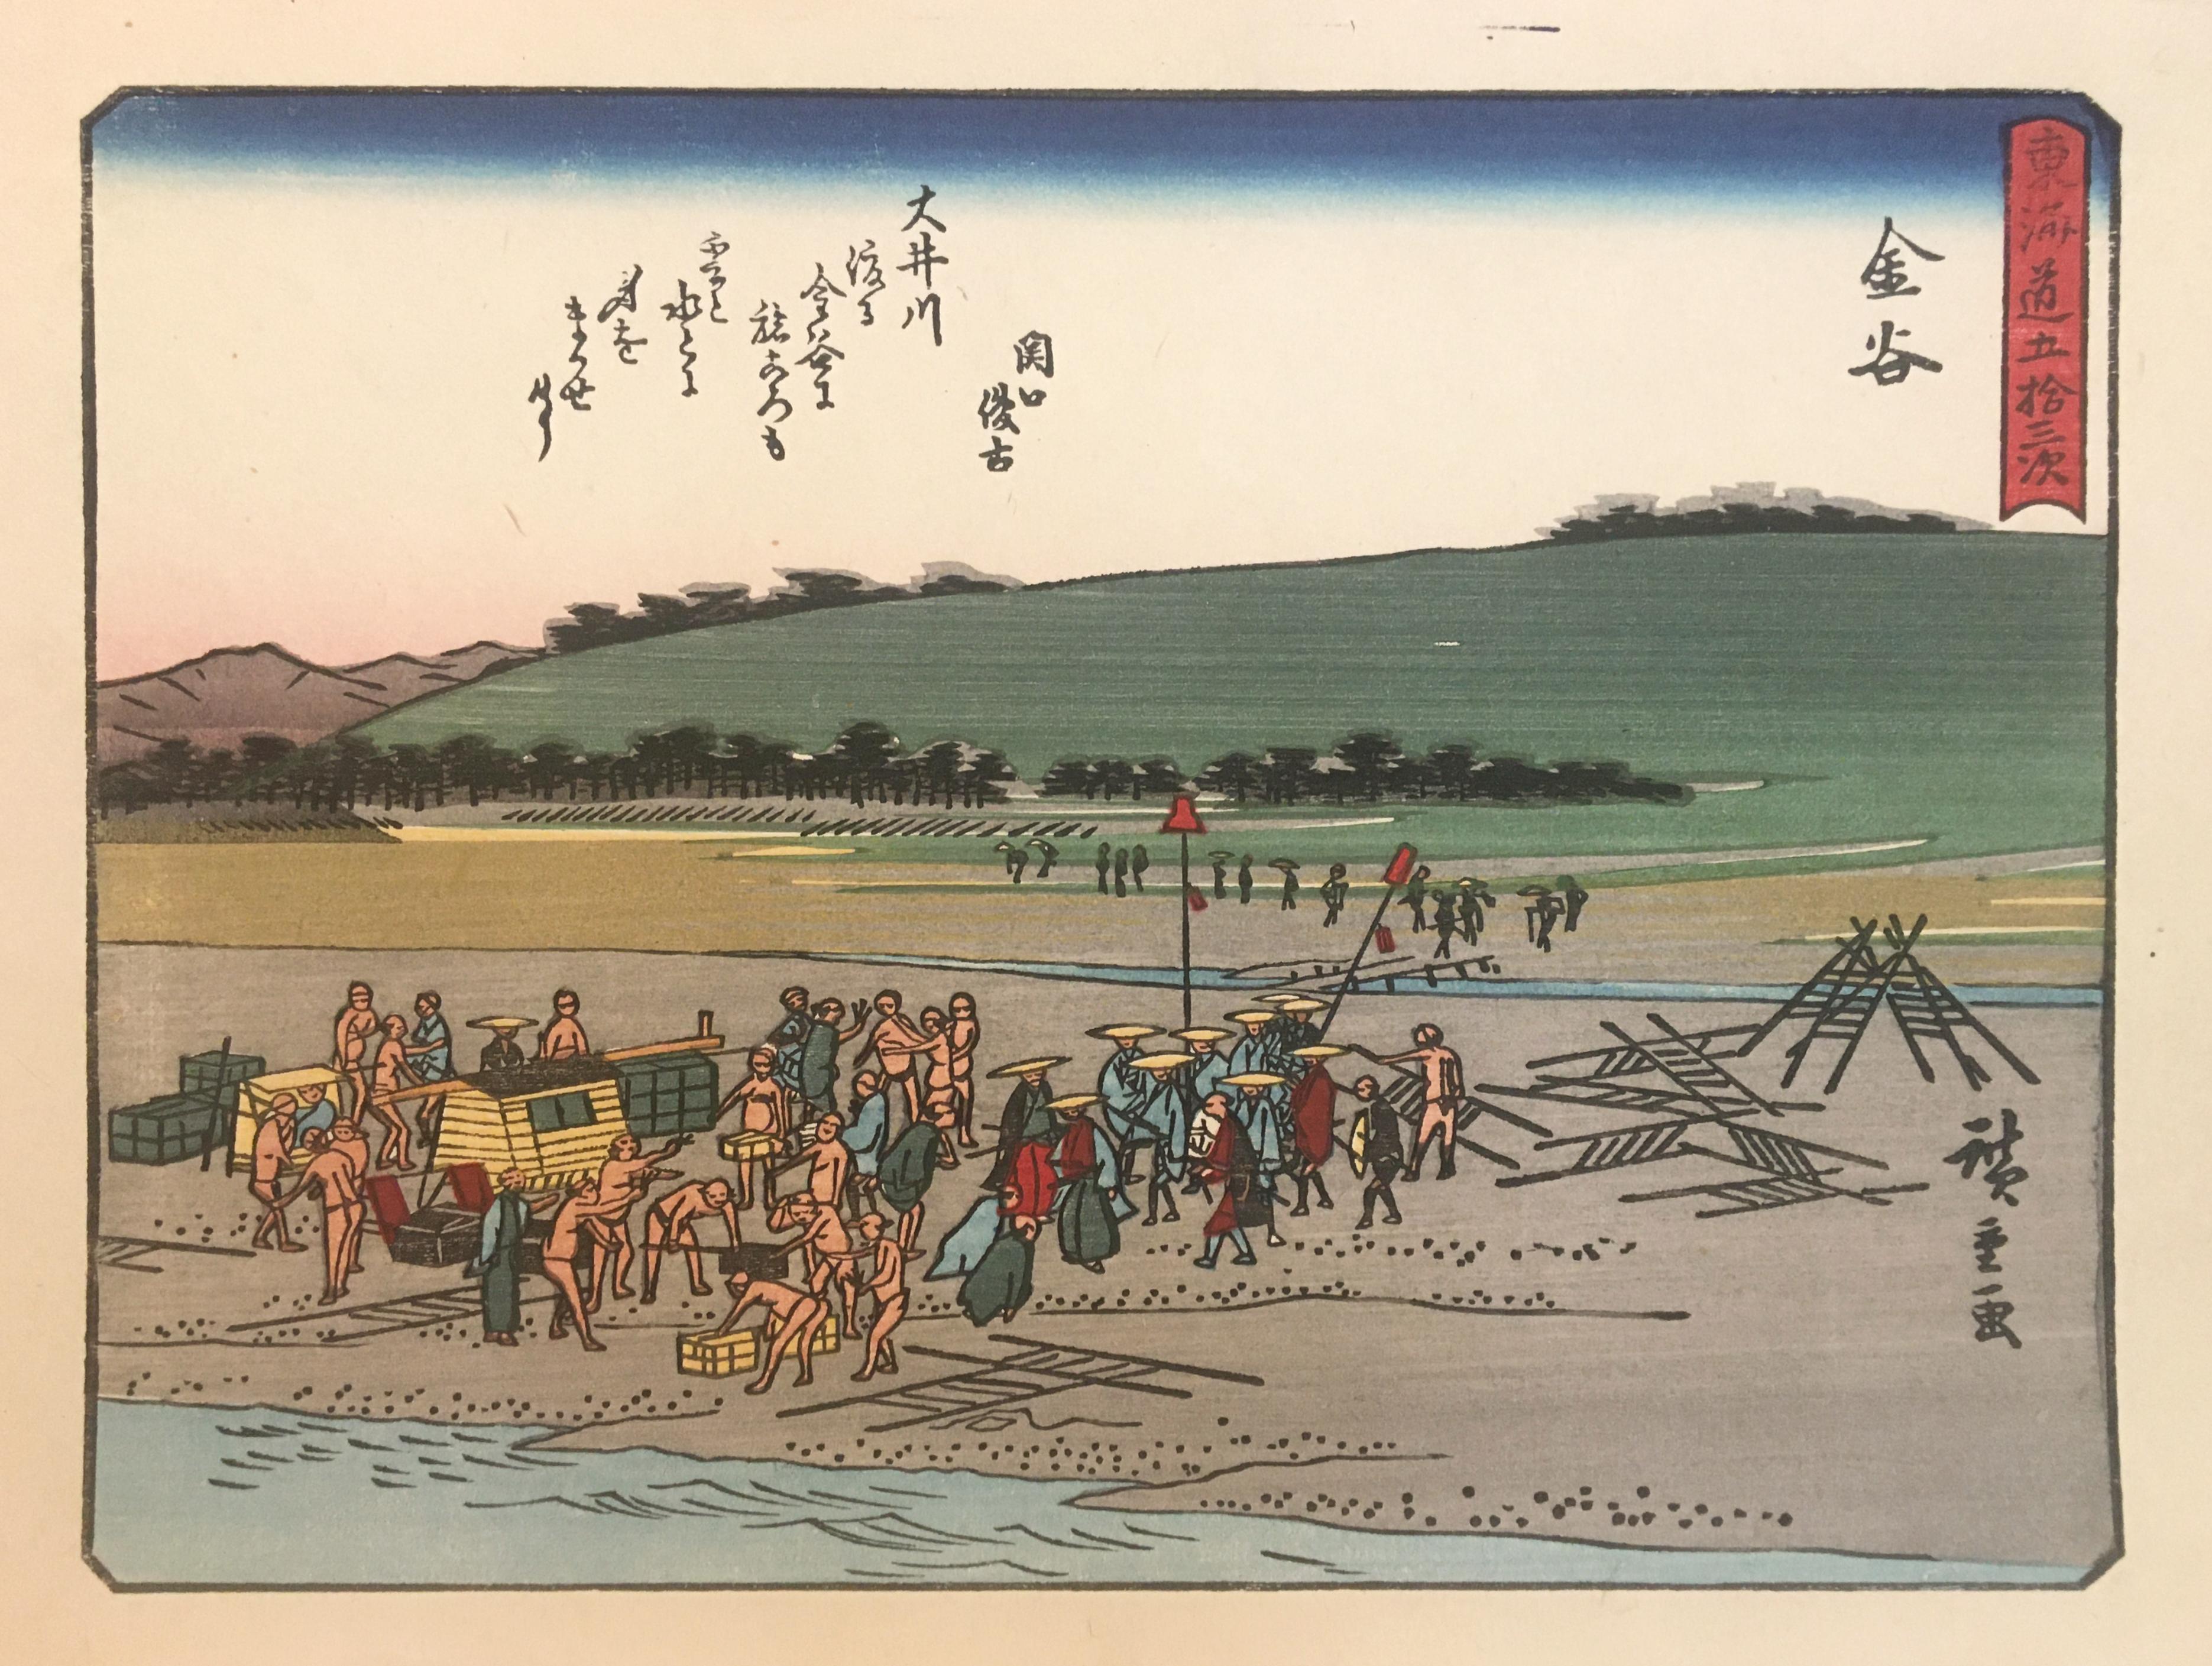 Utagawa Hiroshige (Ando Hiroshige) Landscape Print - 'Travelers at Kanaya', After Utagawa Hiroshige, Ukiyo-E Woodblock, Tokaido, Edo